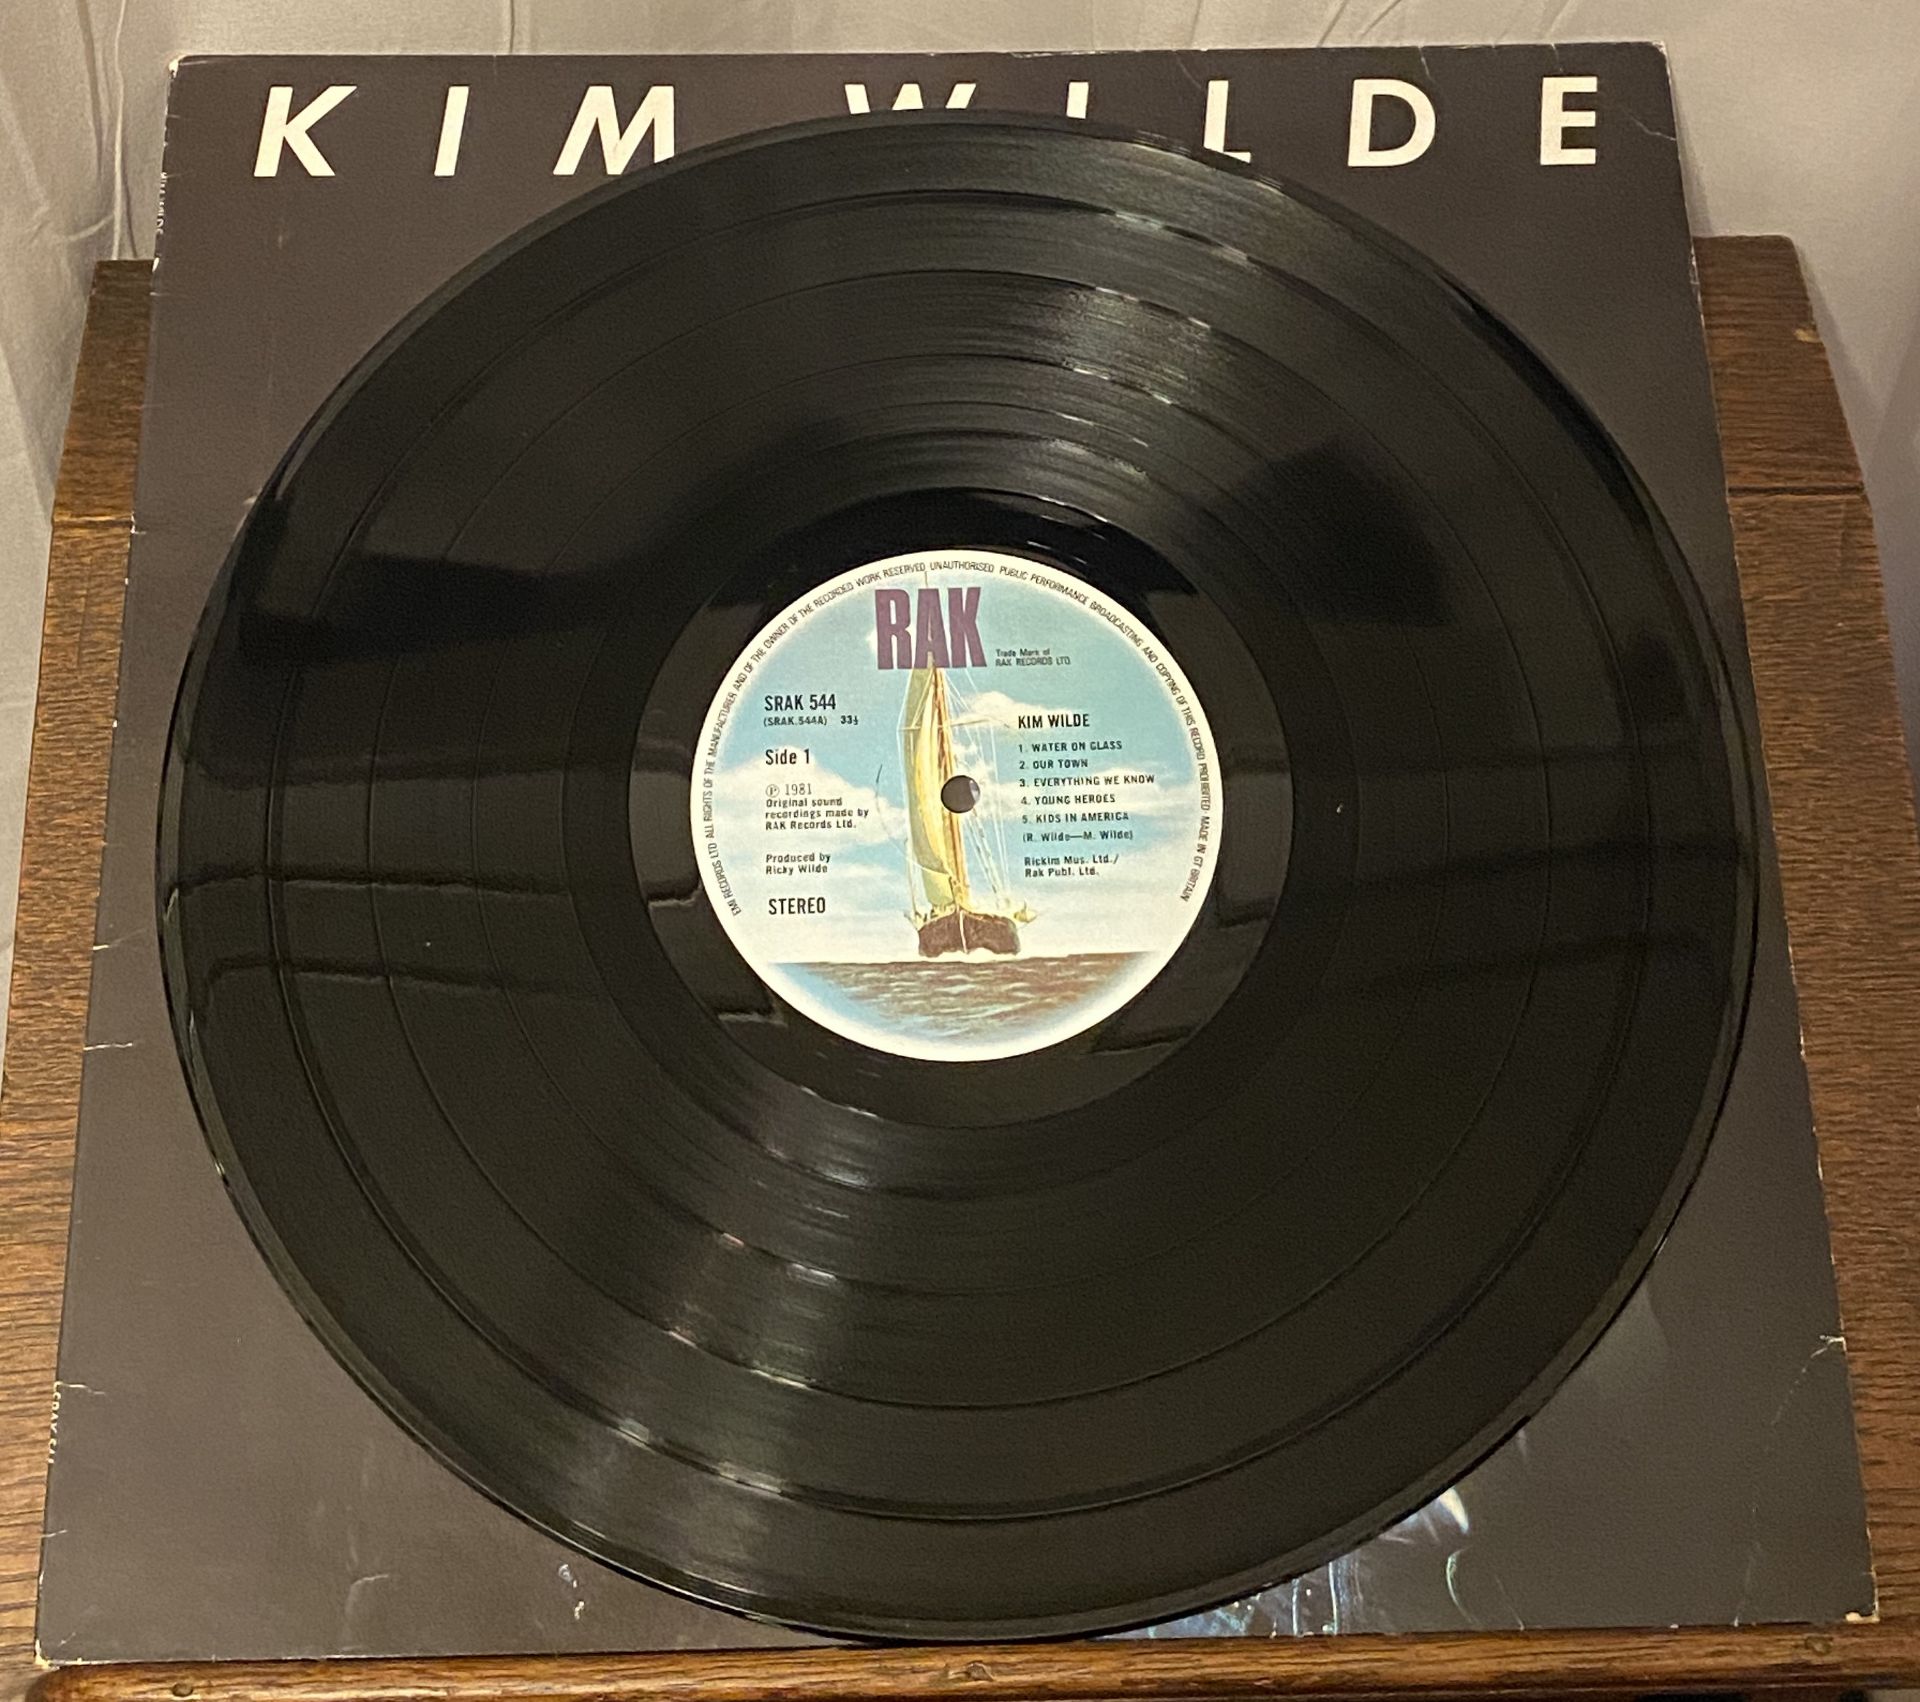 Kim Wilde Signed LP - Alan Partridge LP - The Firm LP. - Image 3 of 20